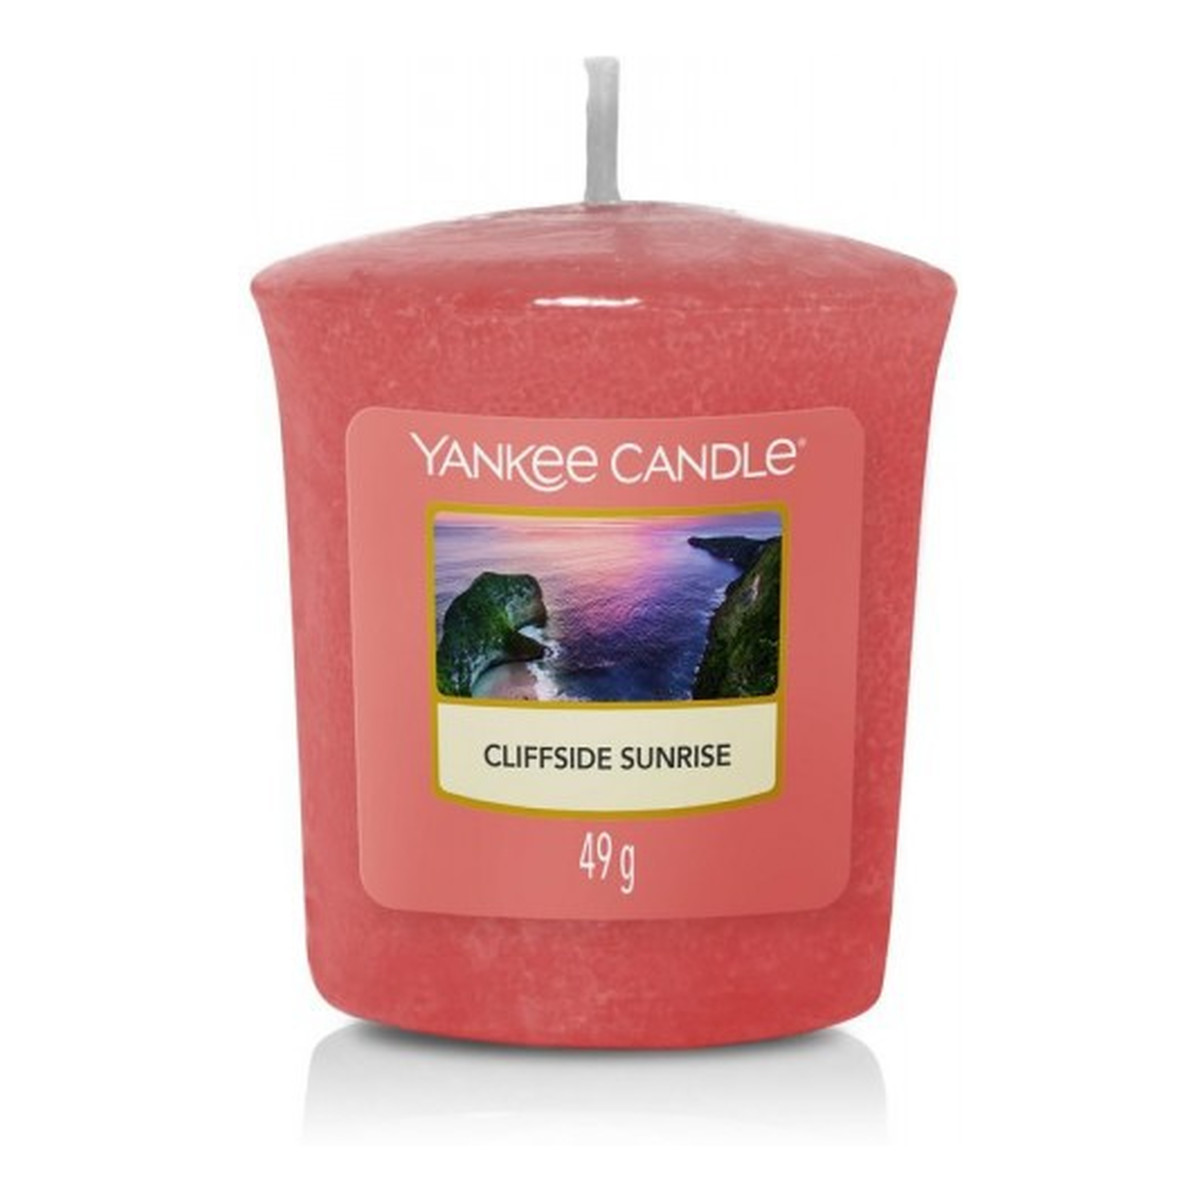 Yankee Candle Świeca zapachowa Cliffside Sunrise 49g